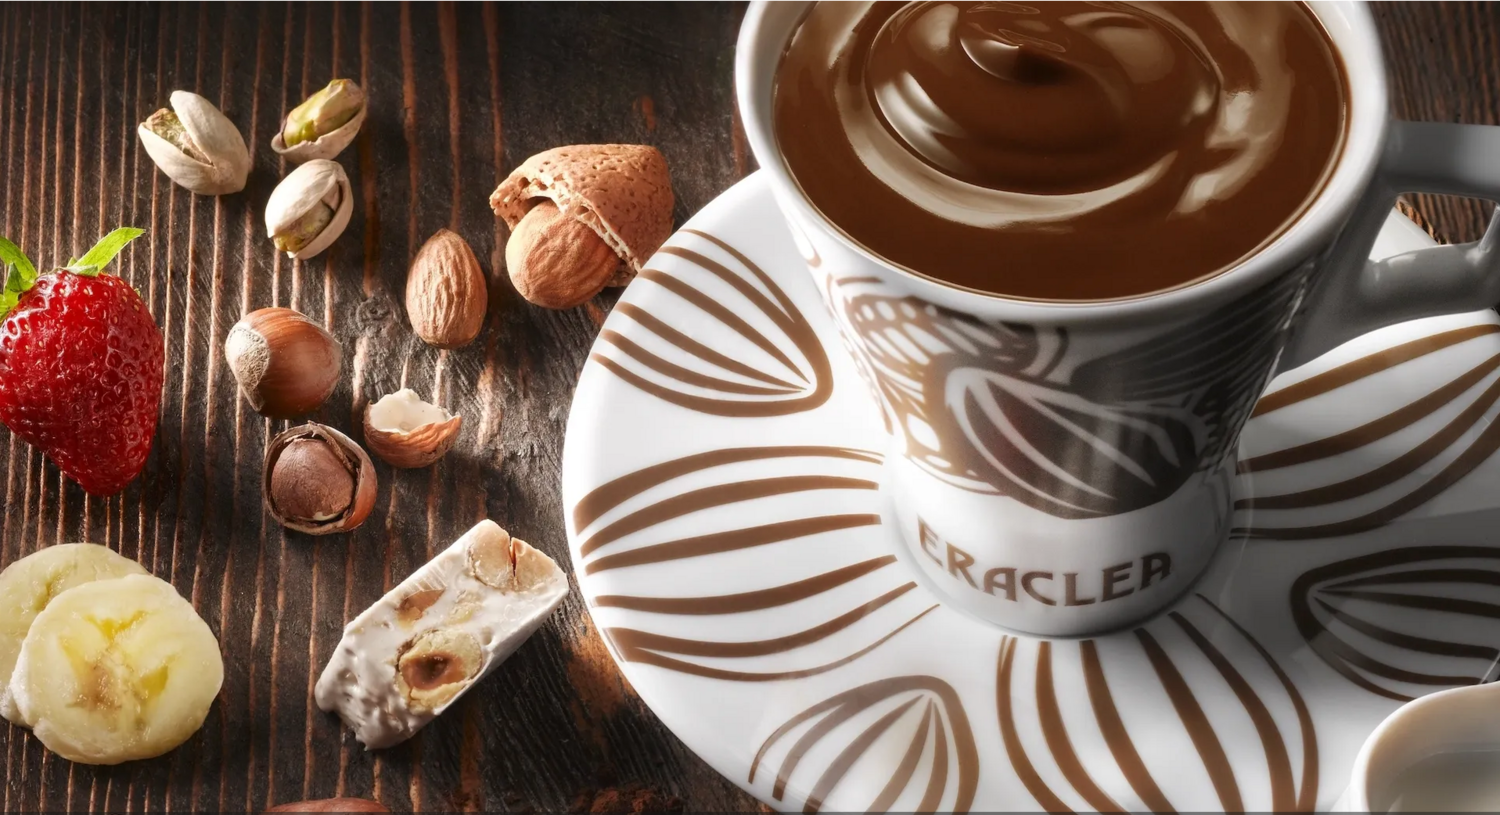 Klassische Zartbitterschokolade -GLUTENFREI- Portionsbeutel 32g Eraclea Nr. 36 mit 39% Kakao